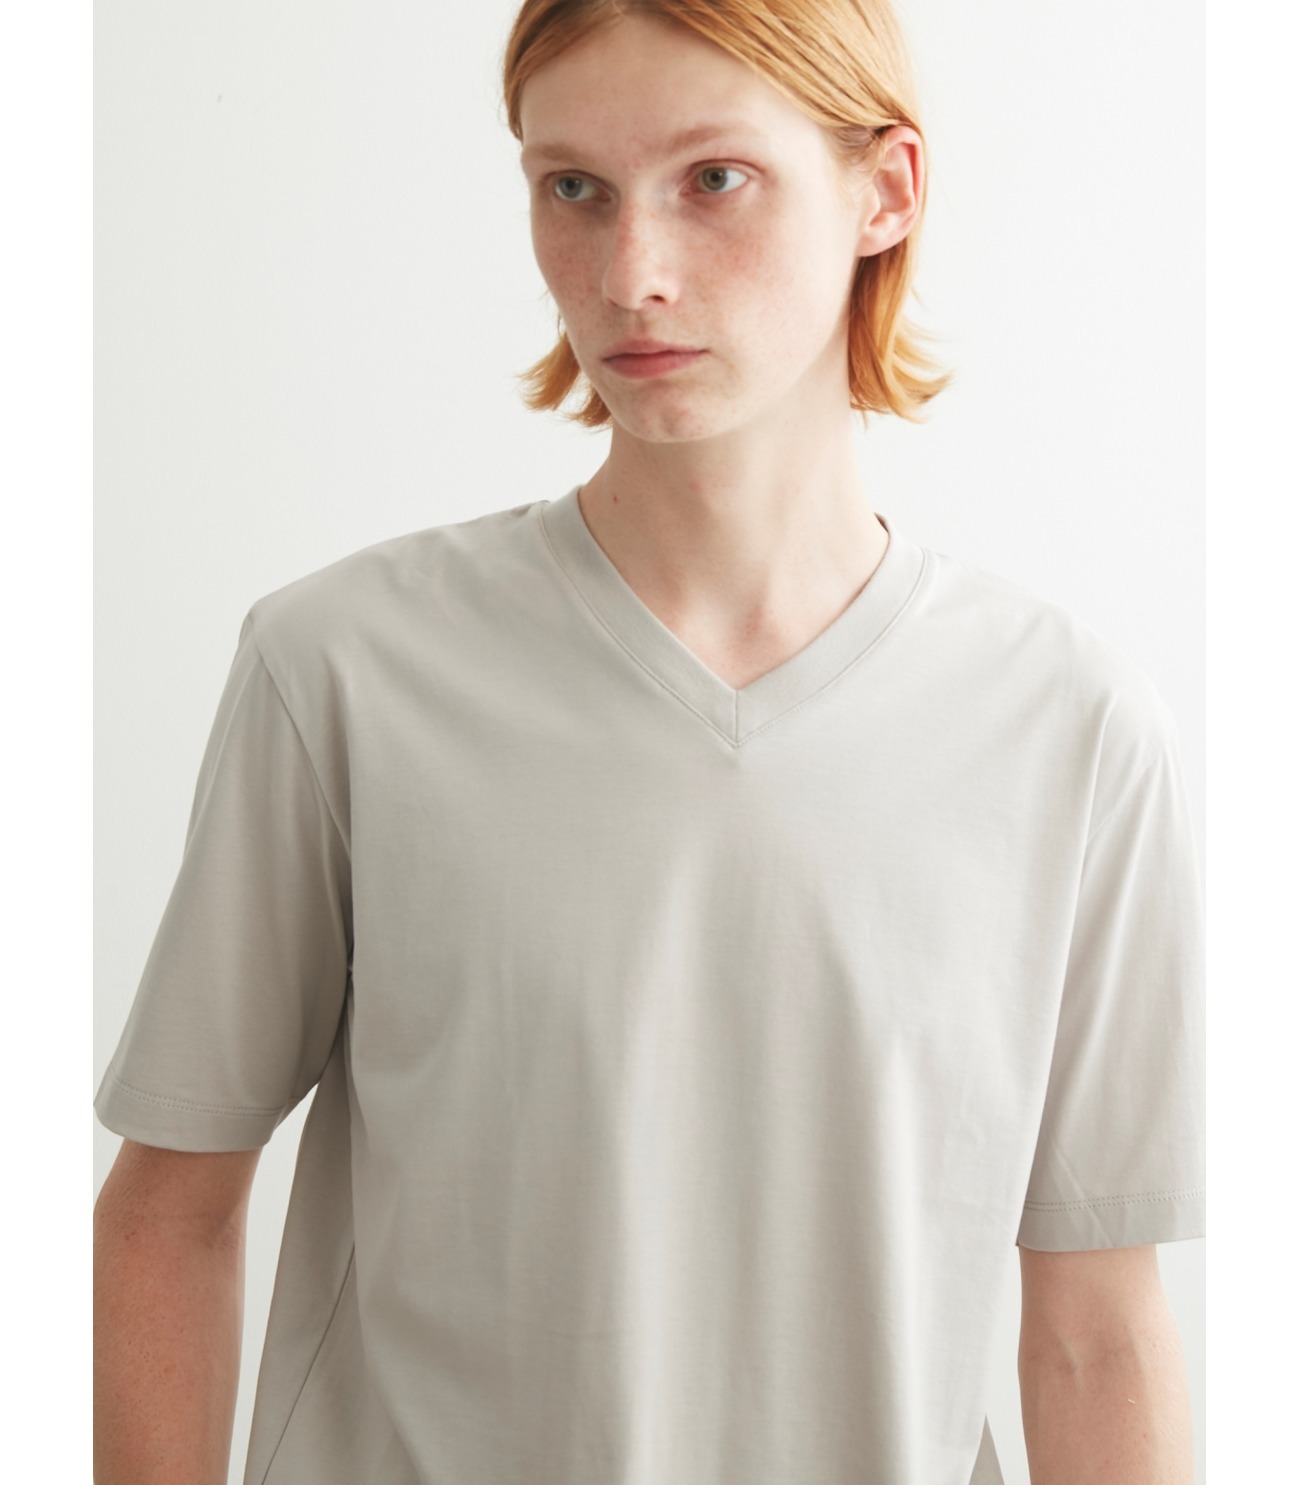 Men's premium suvin jersey v-neck 詳細画像 white 8